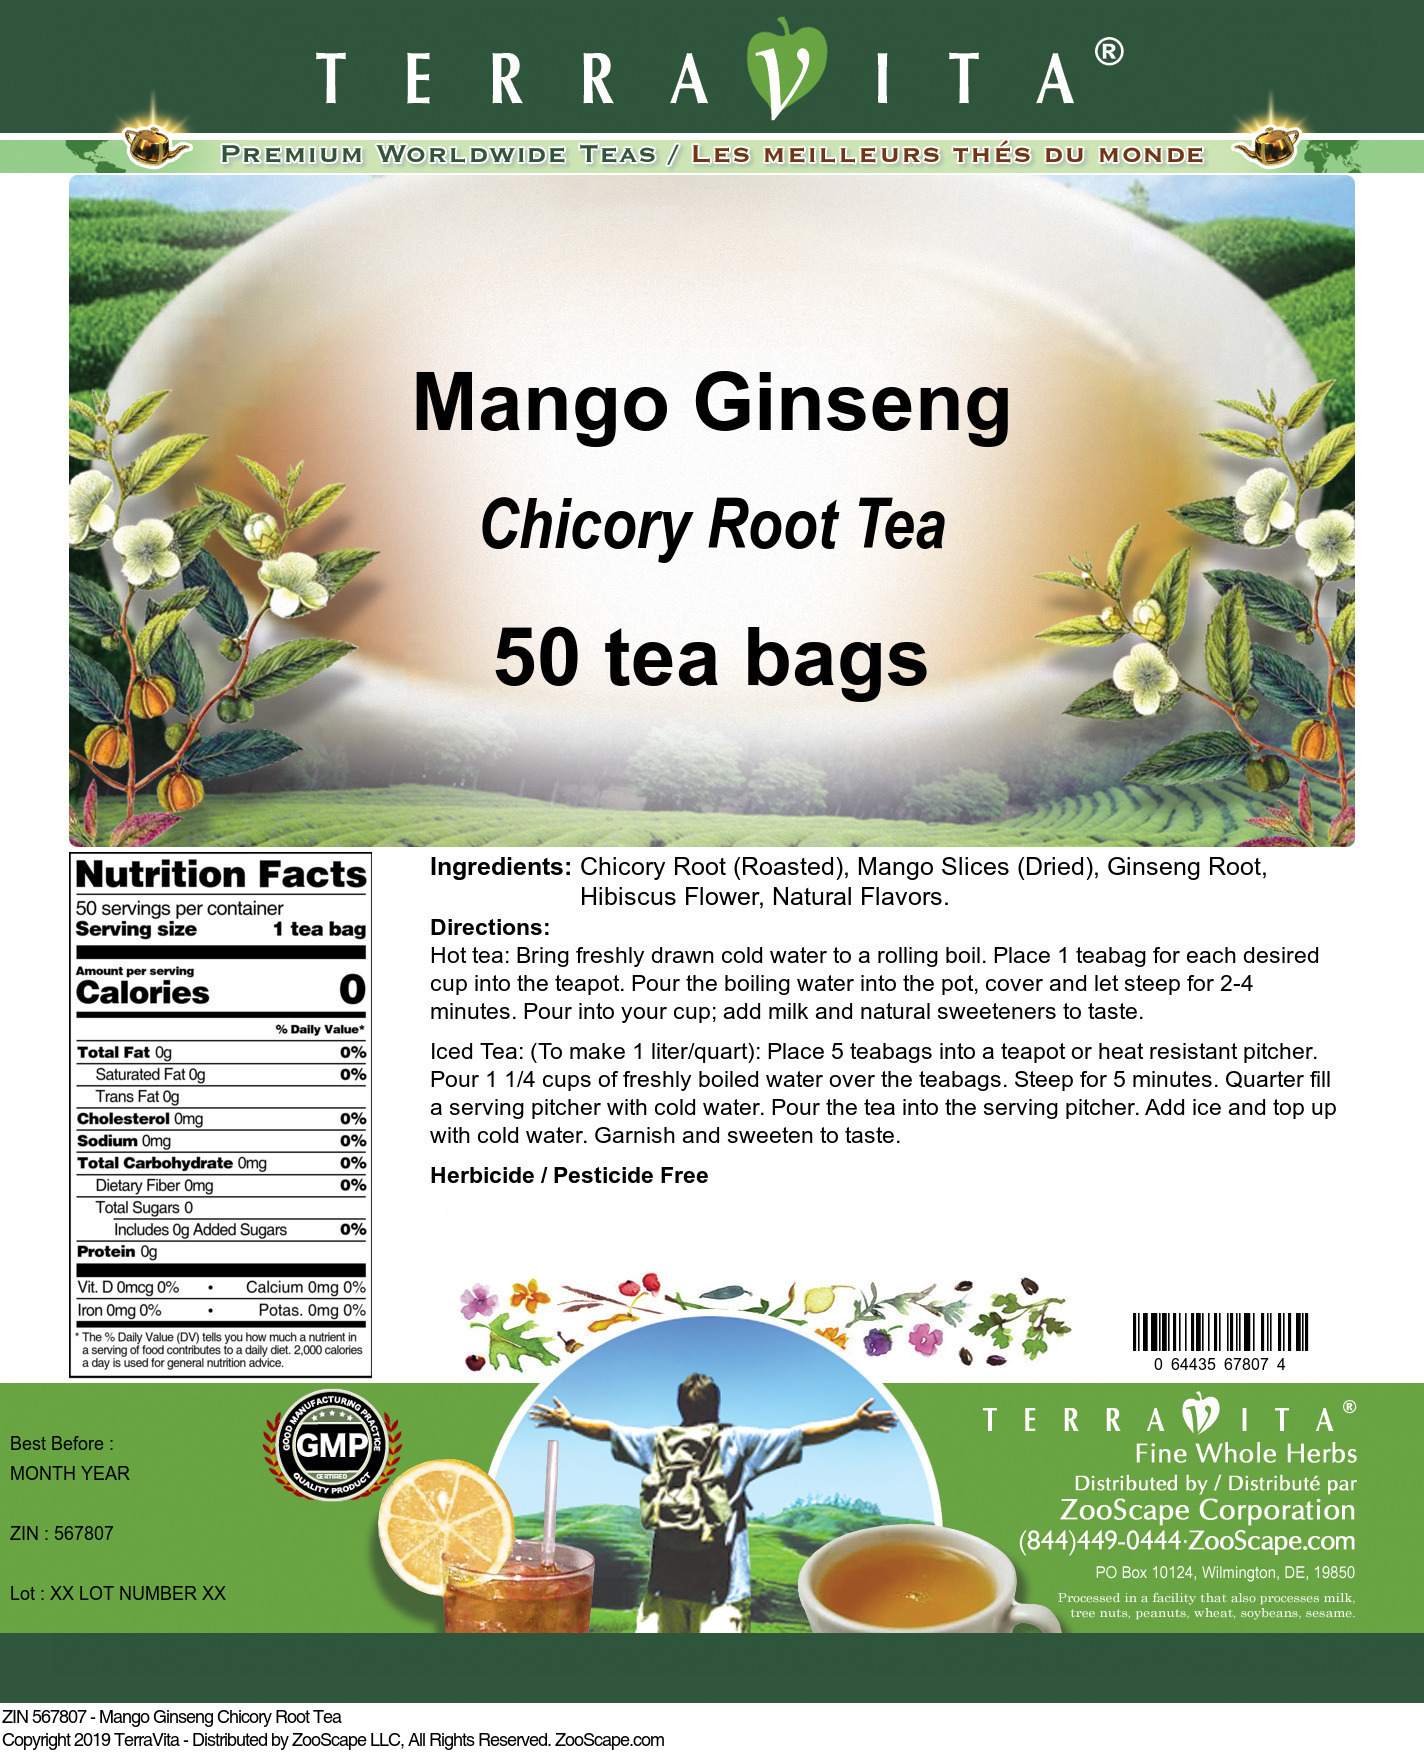 Mango Ginseng Chicory Root Tea - Label